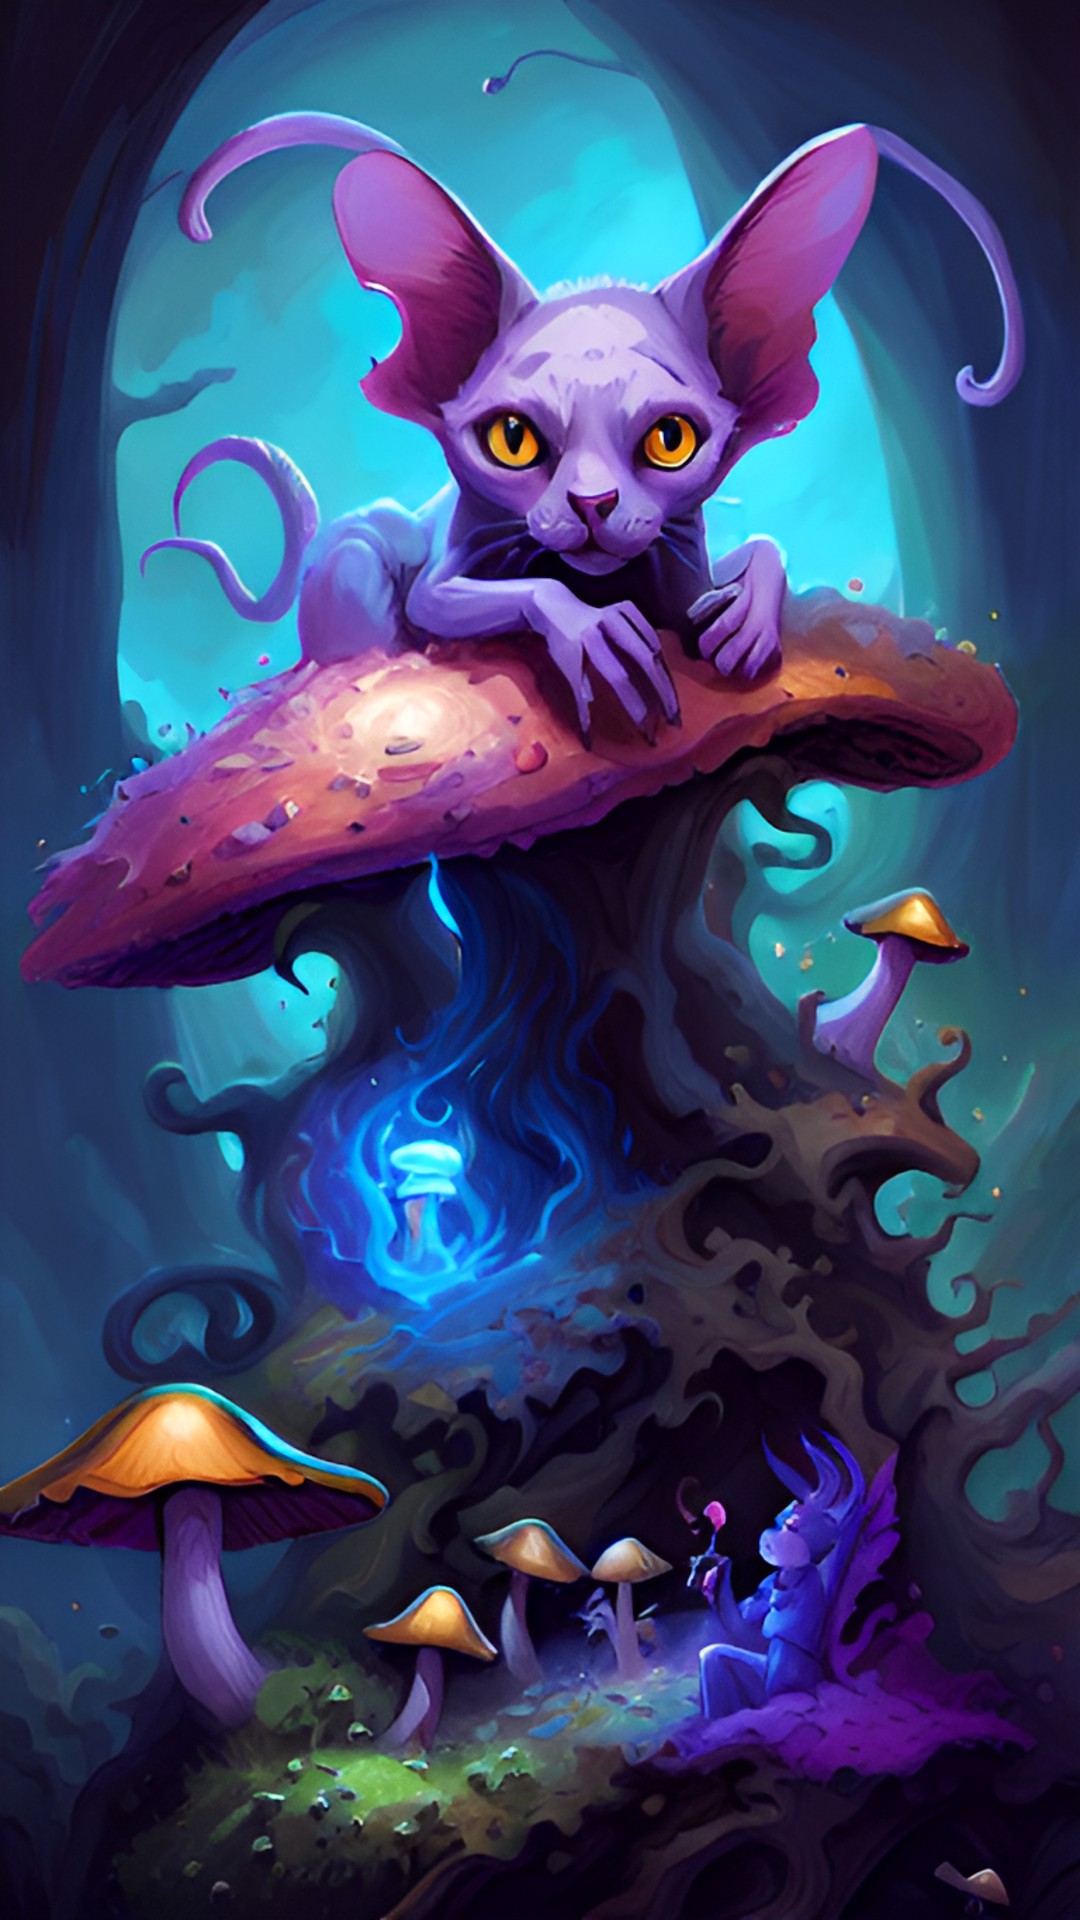 Wizarding cat - sphinx cat mushrooms ant, wizard! preview